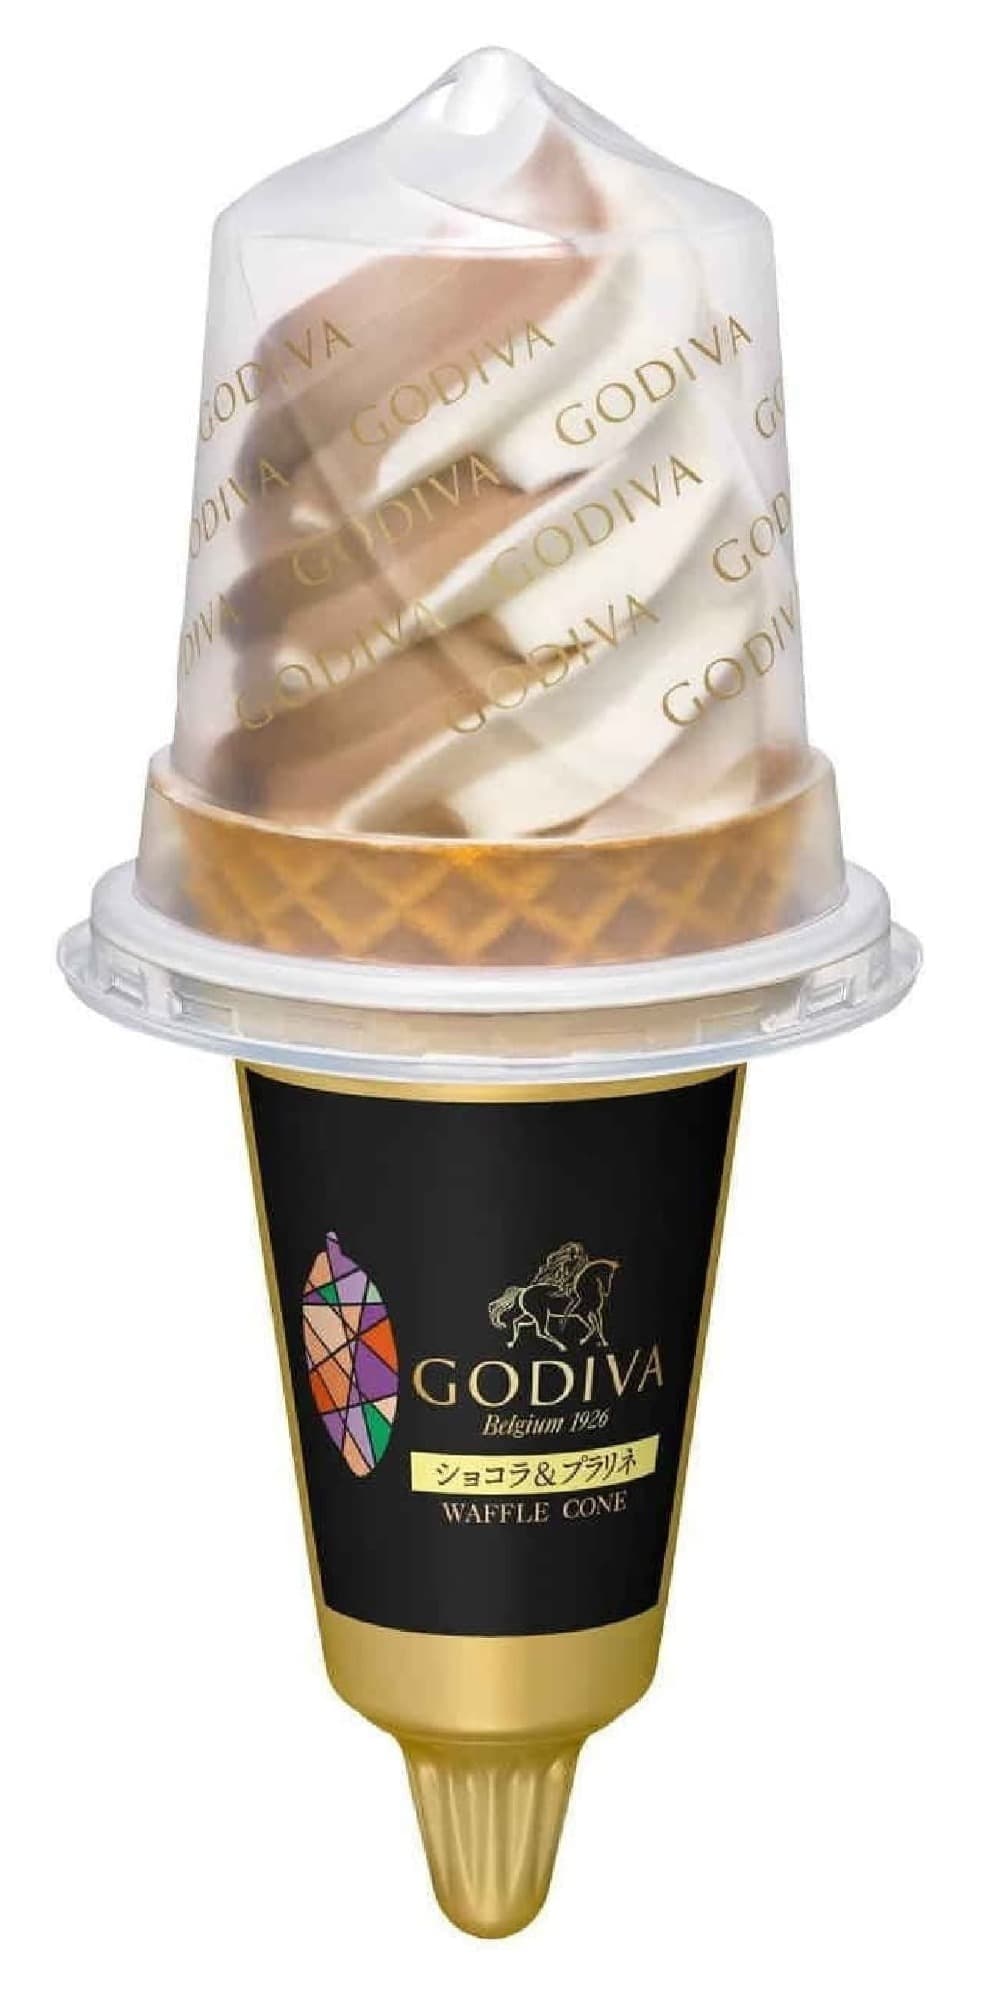 Lotte "GODIVA Waffle Cone Chocolat & Praline